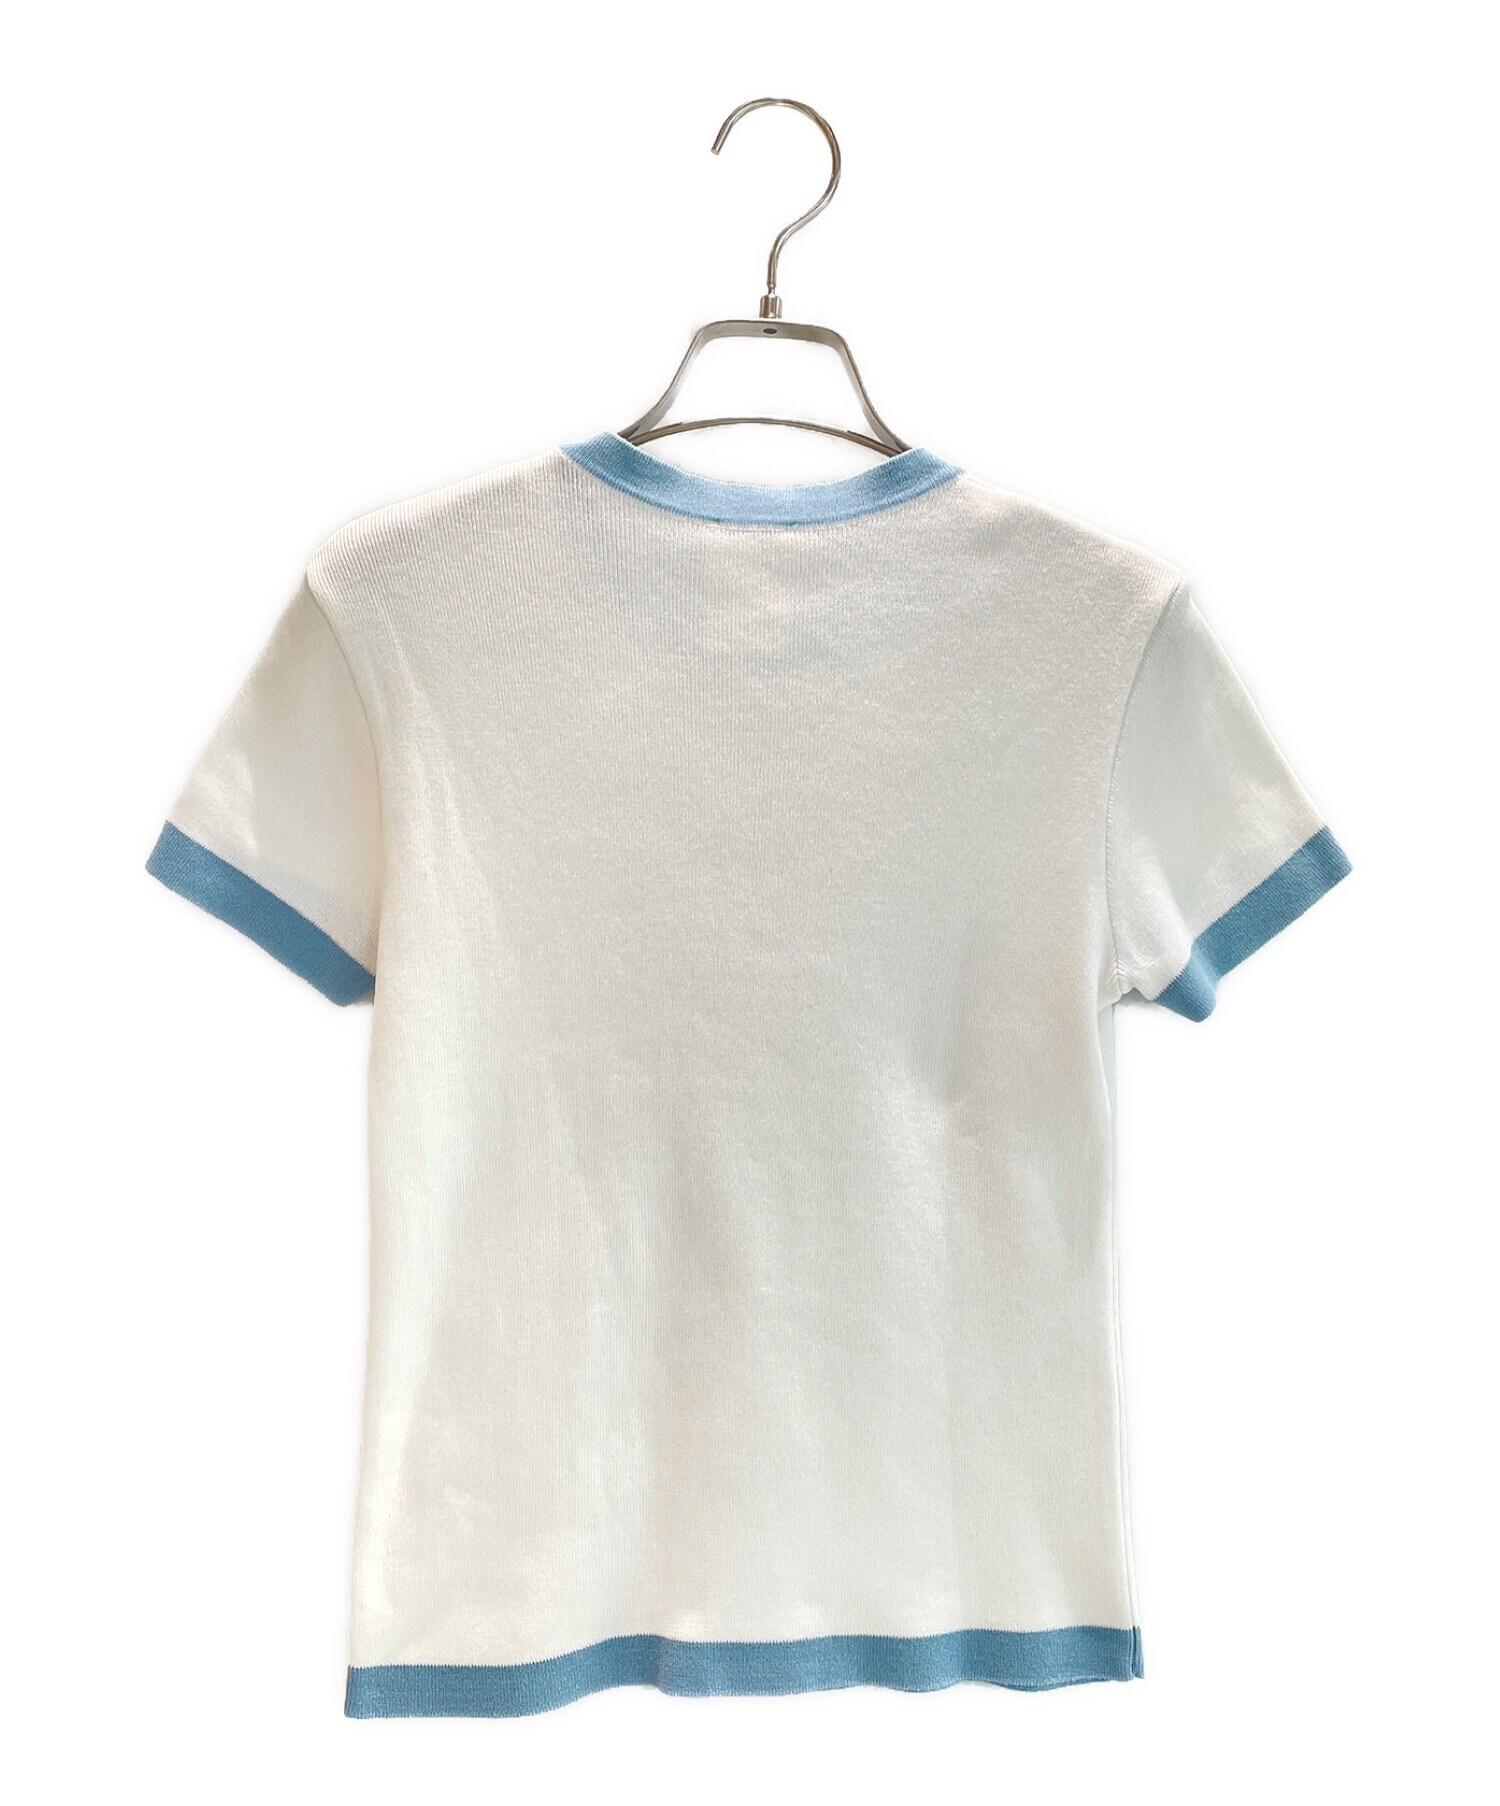 CHANEL (シャネル) ココマークリンガーニットTシャツ ホワイト×スカイブルー サイズ:40